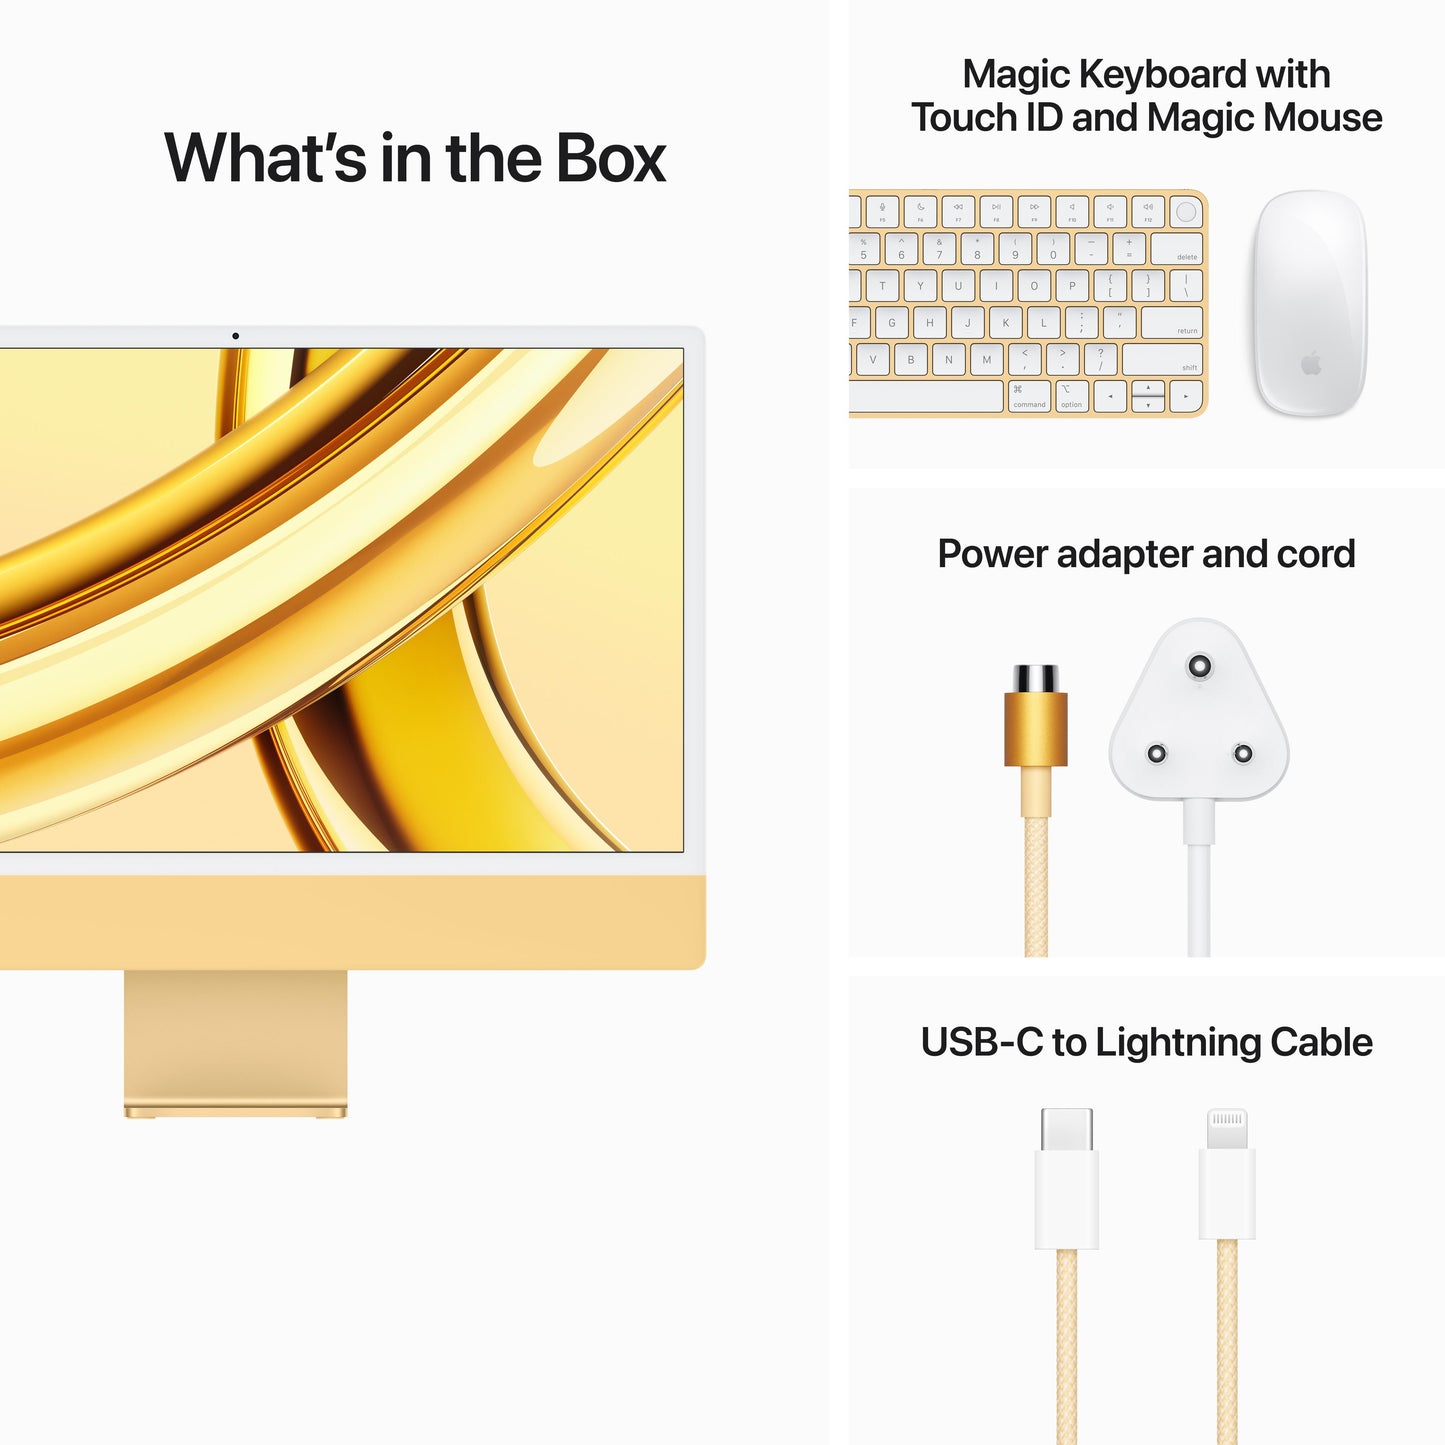 24-inch iMac with Retina 4.5K display: Apple M3 chip with 8‑core CPU and 10‑core GPU, 512GB SSD - Yellow